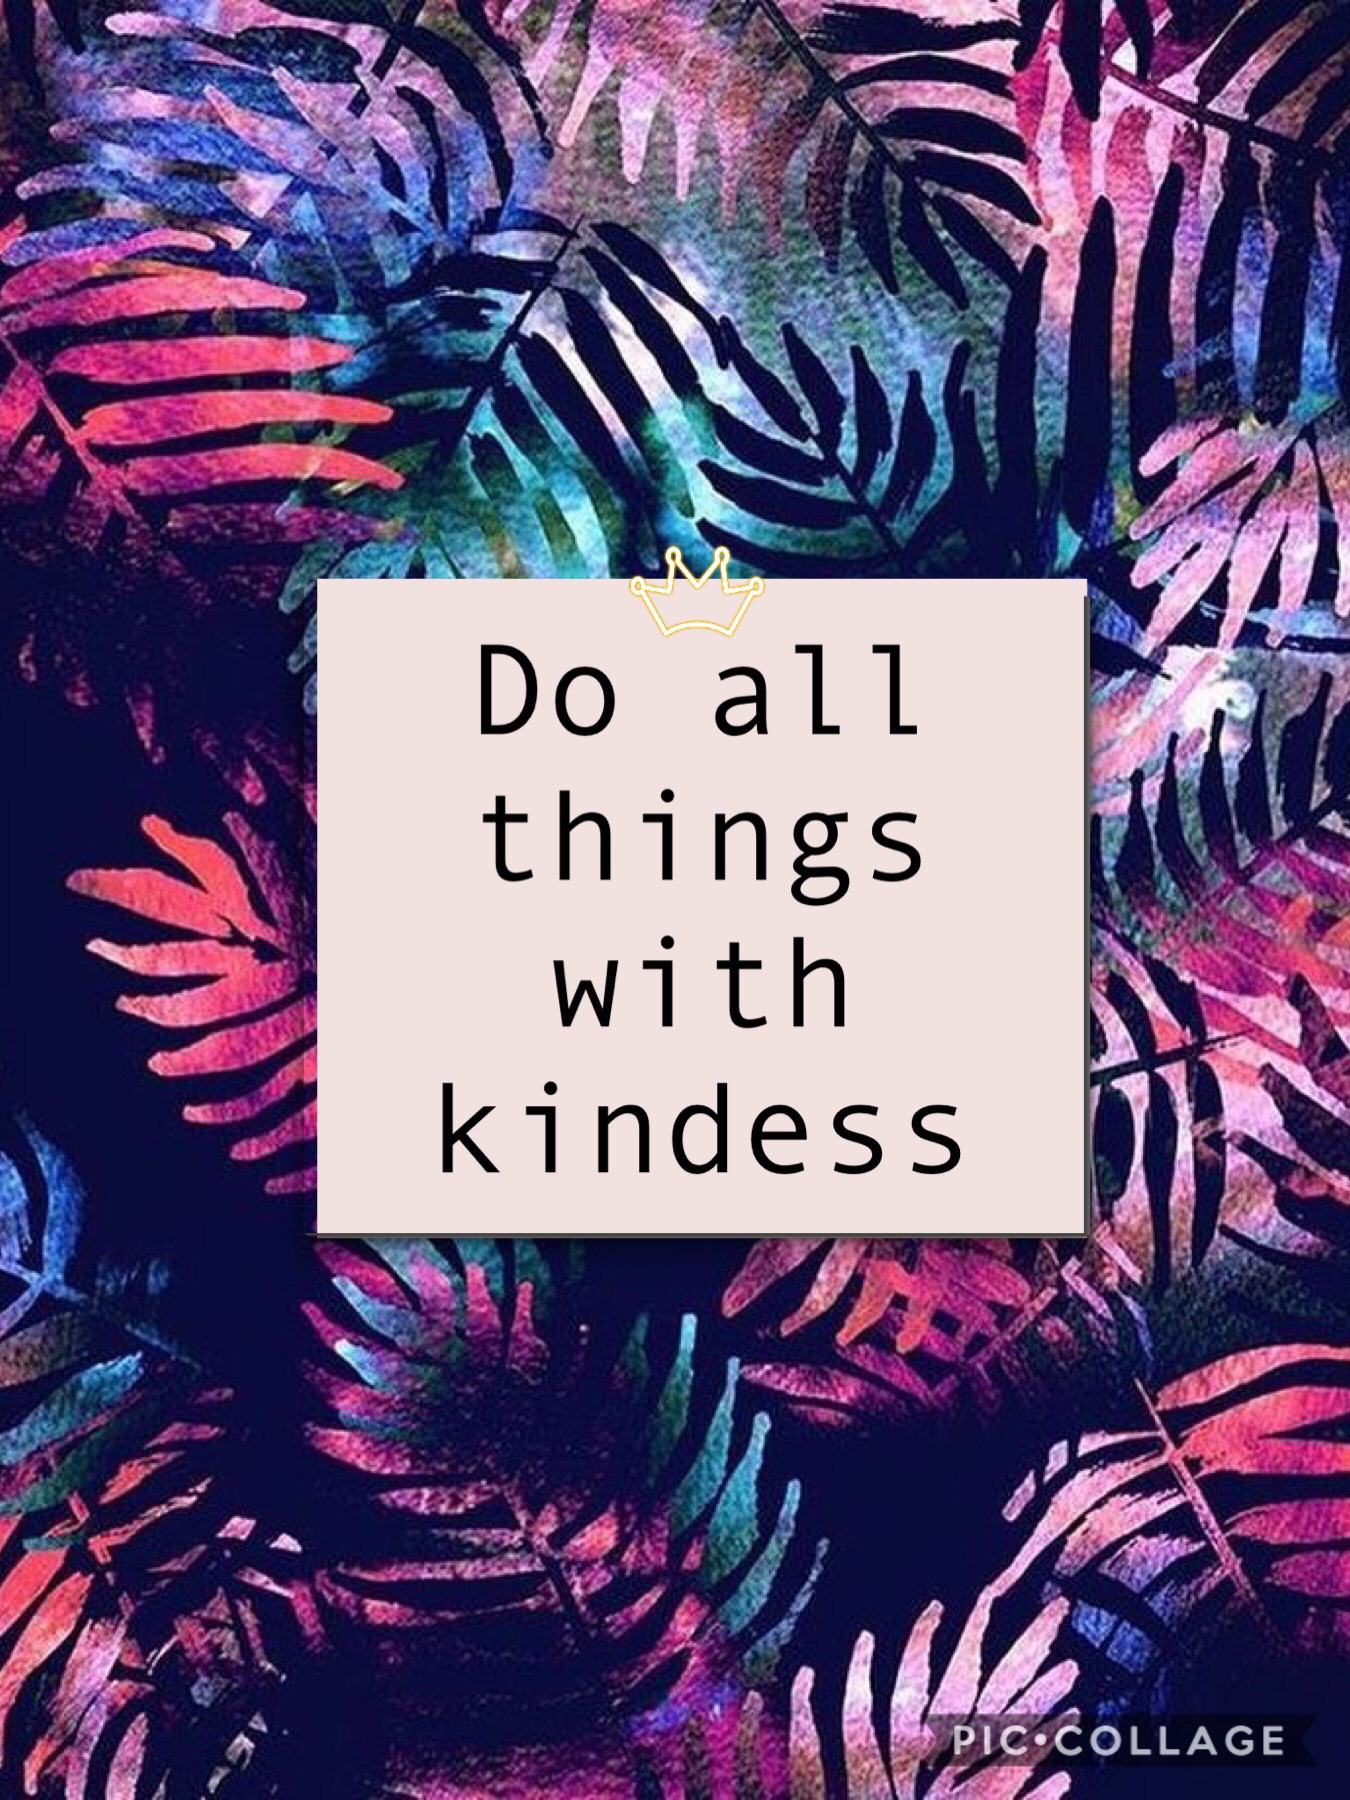 #kindness week!